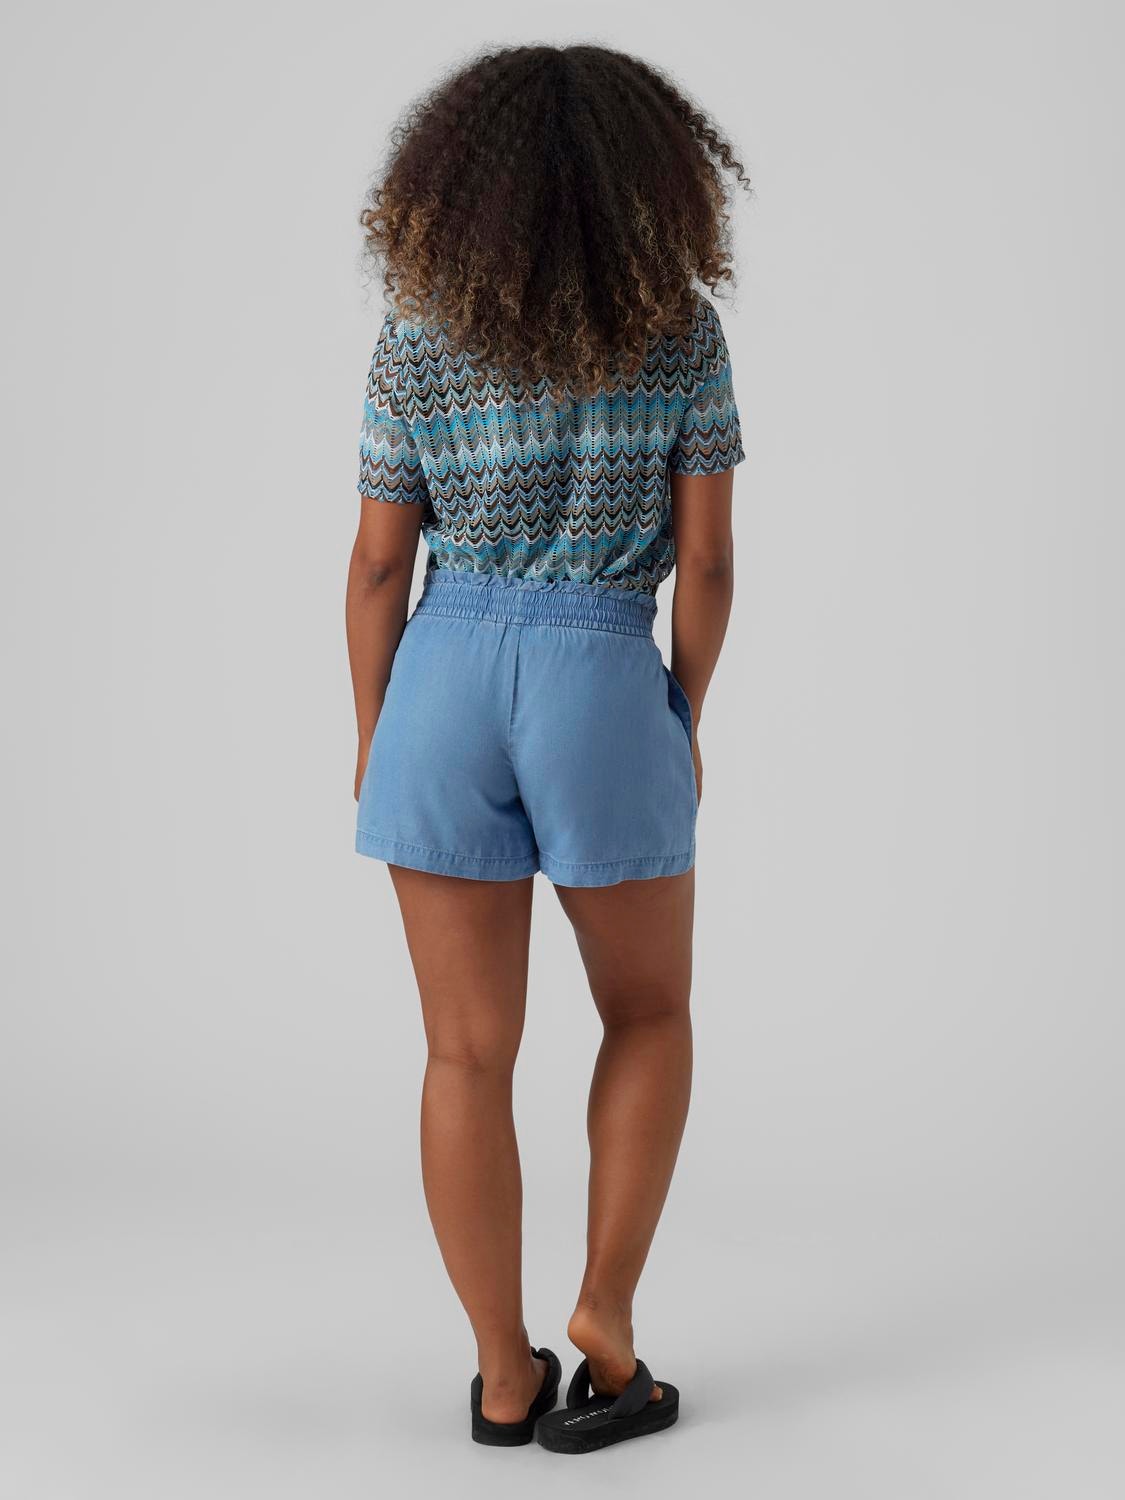 MAMA.LICIOUS Shorts Corte regular -Medium Blue Denim - 20018828